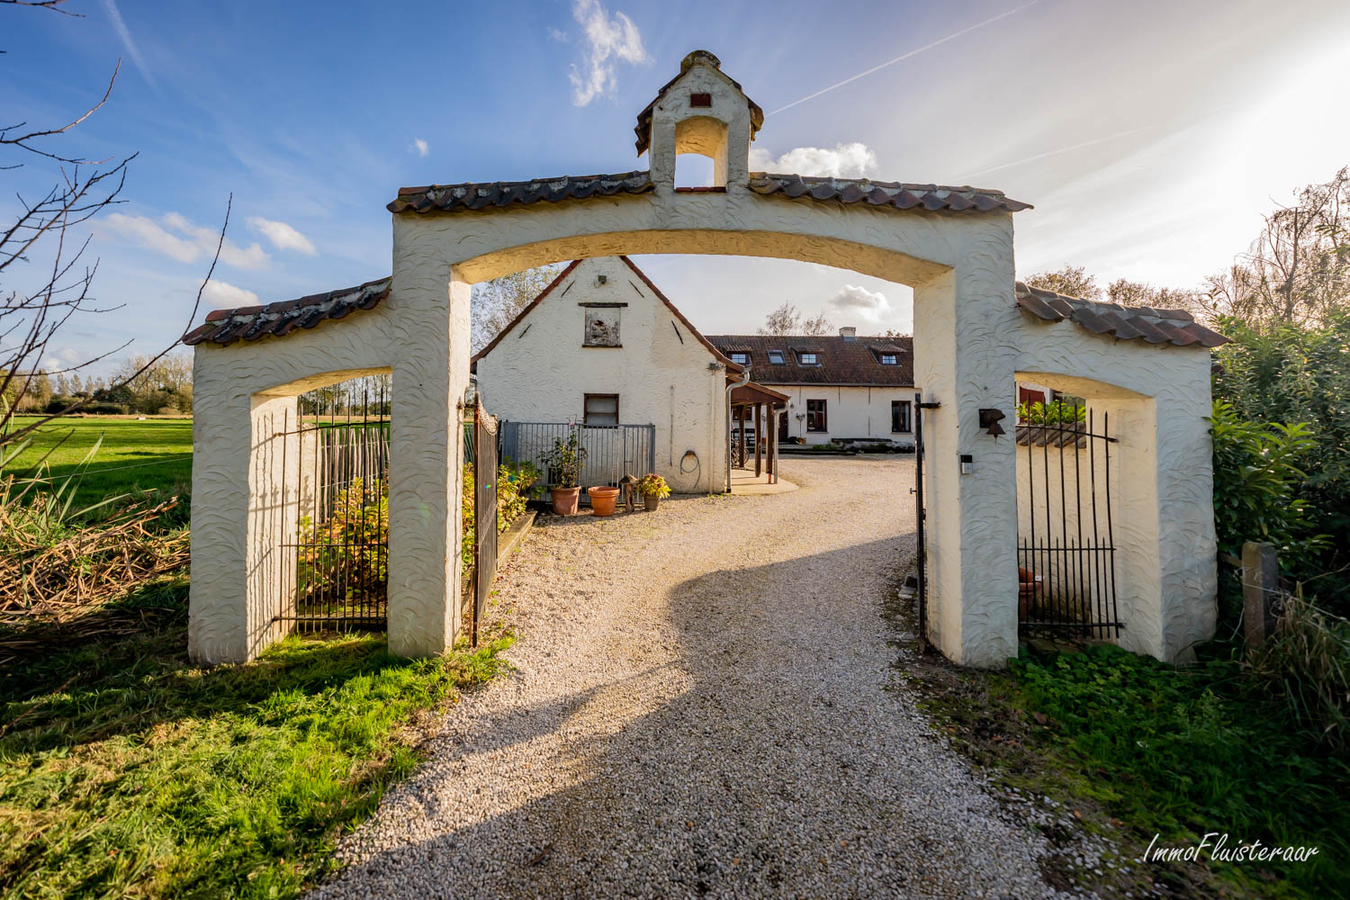 Property for sale in Lochristi